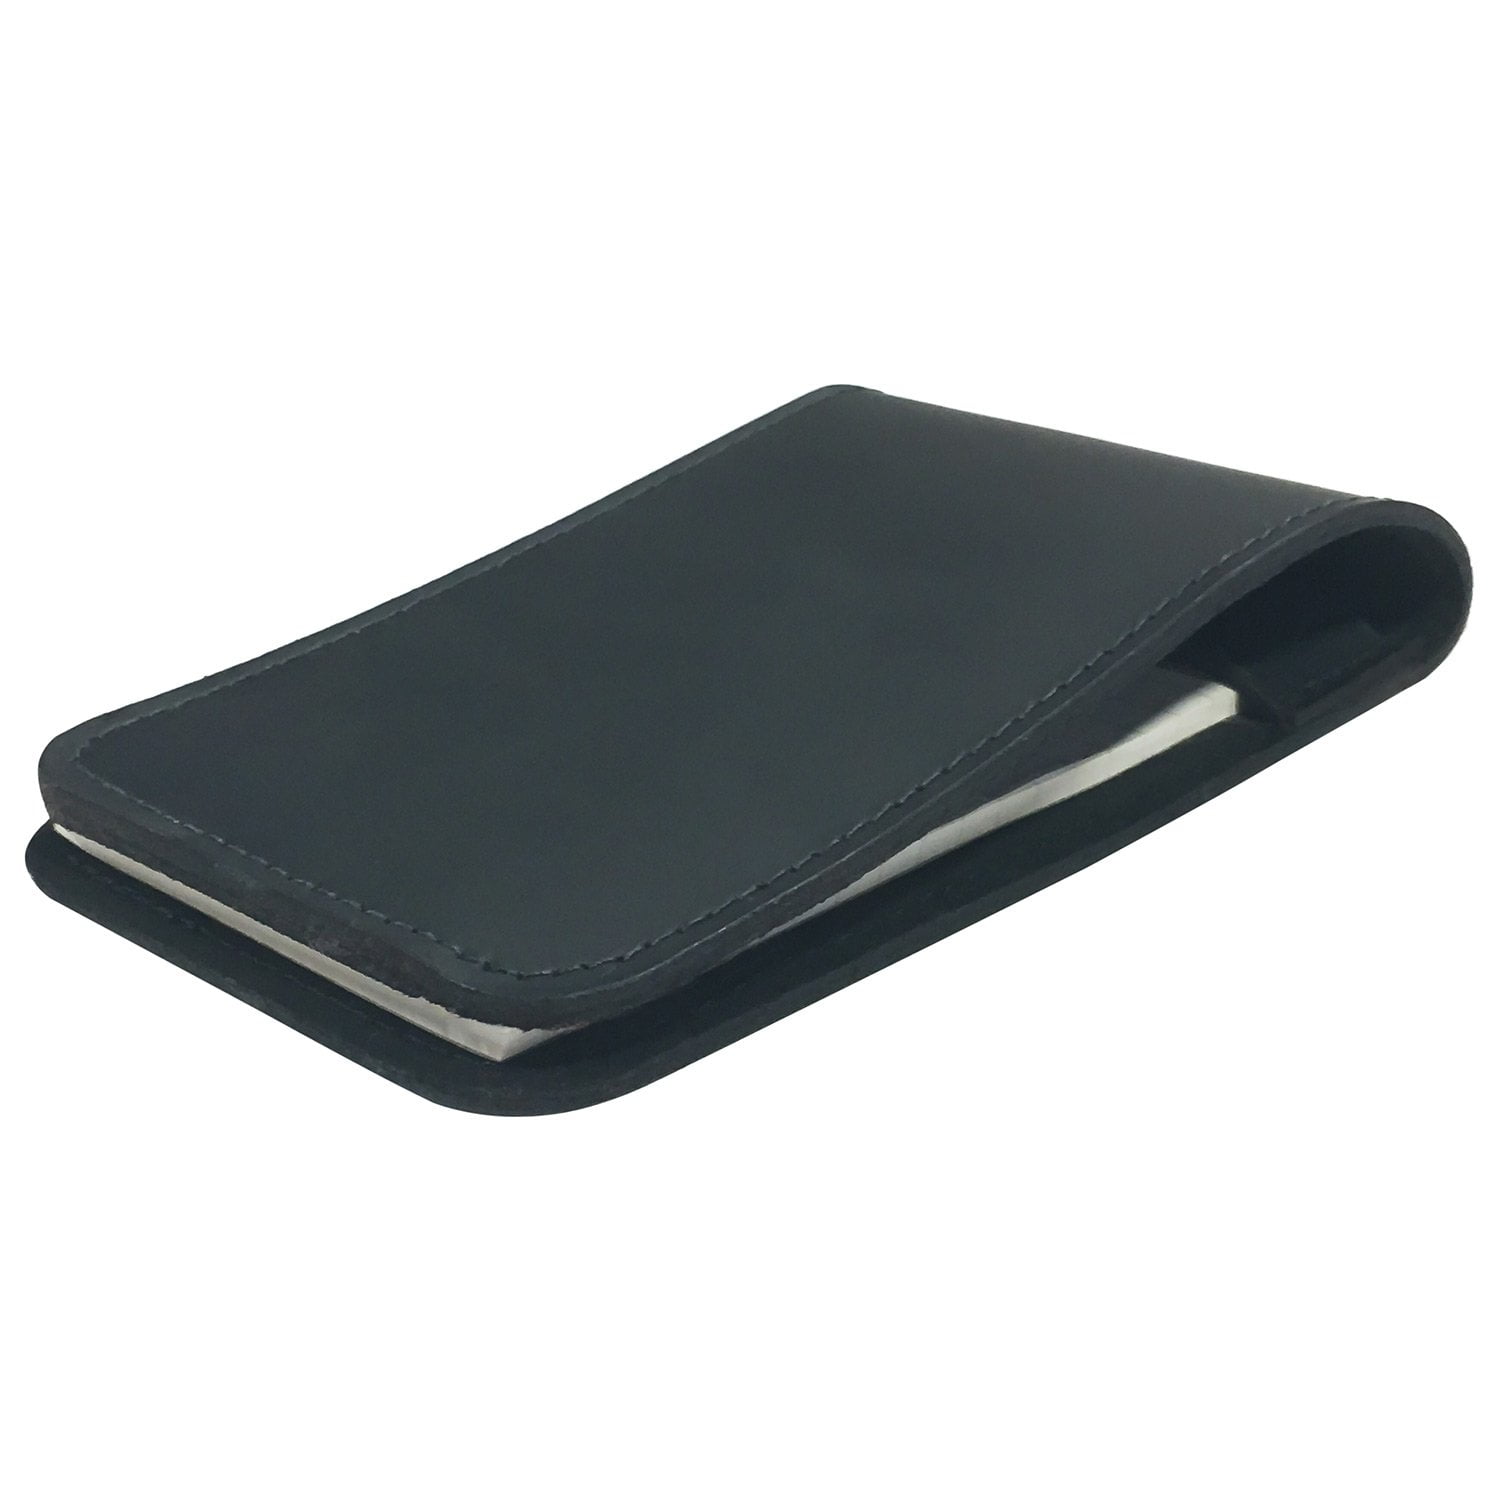 Memo Pad Cover & Holder, 3.5-Inch X 5.5-Inch Pocket ...